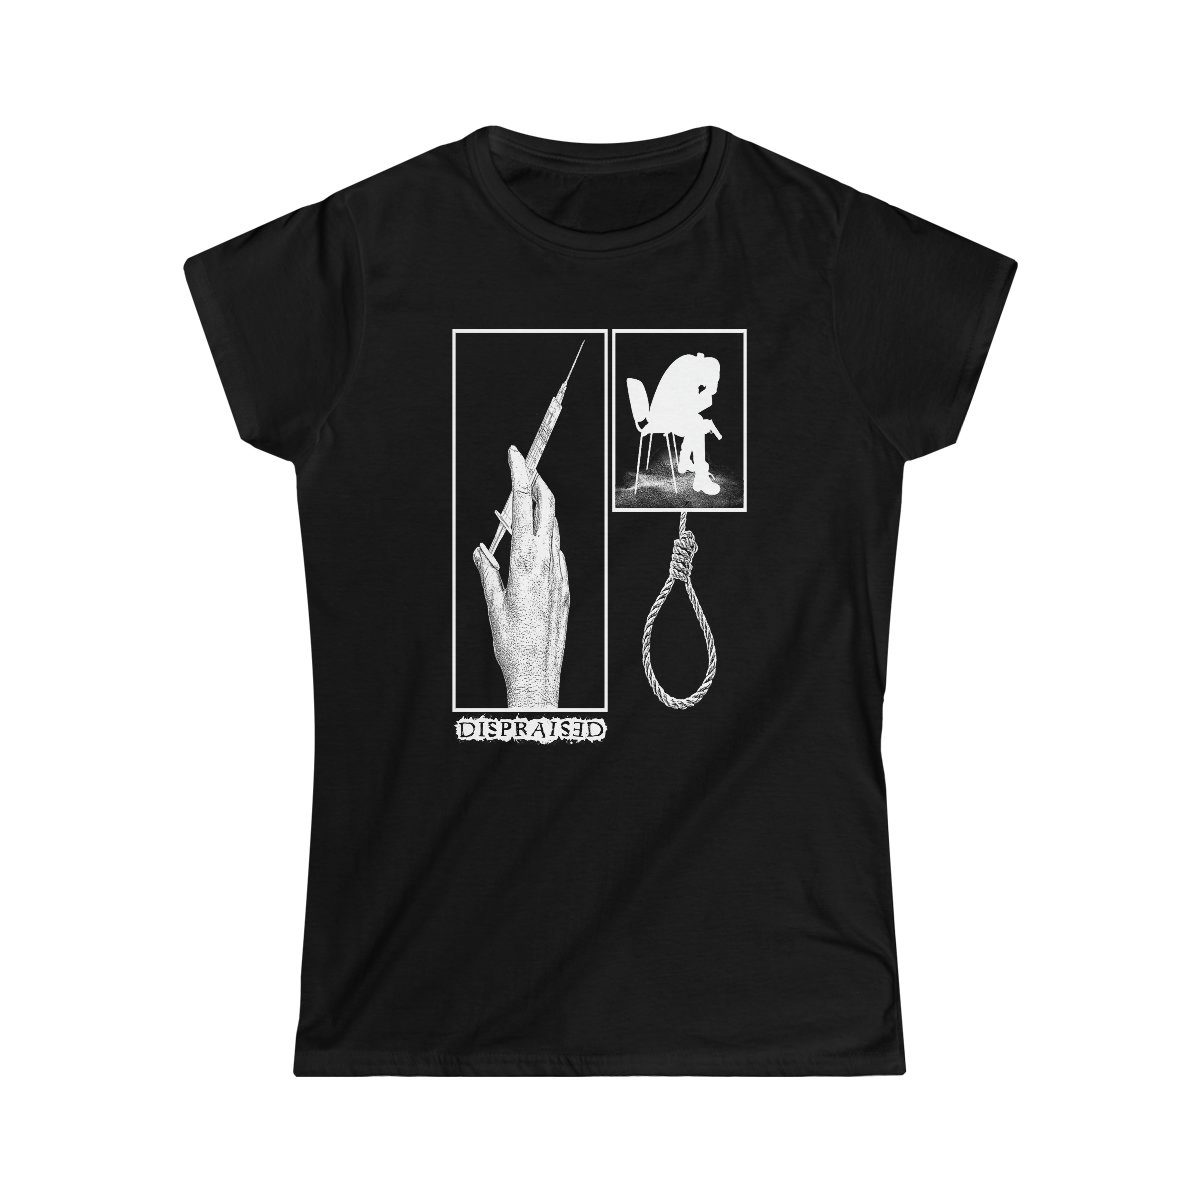 Dispraised – Vaxuicide  Women’s Short Sleeve Tshirt 64000L